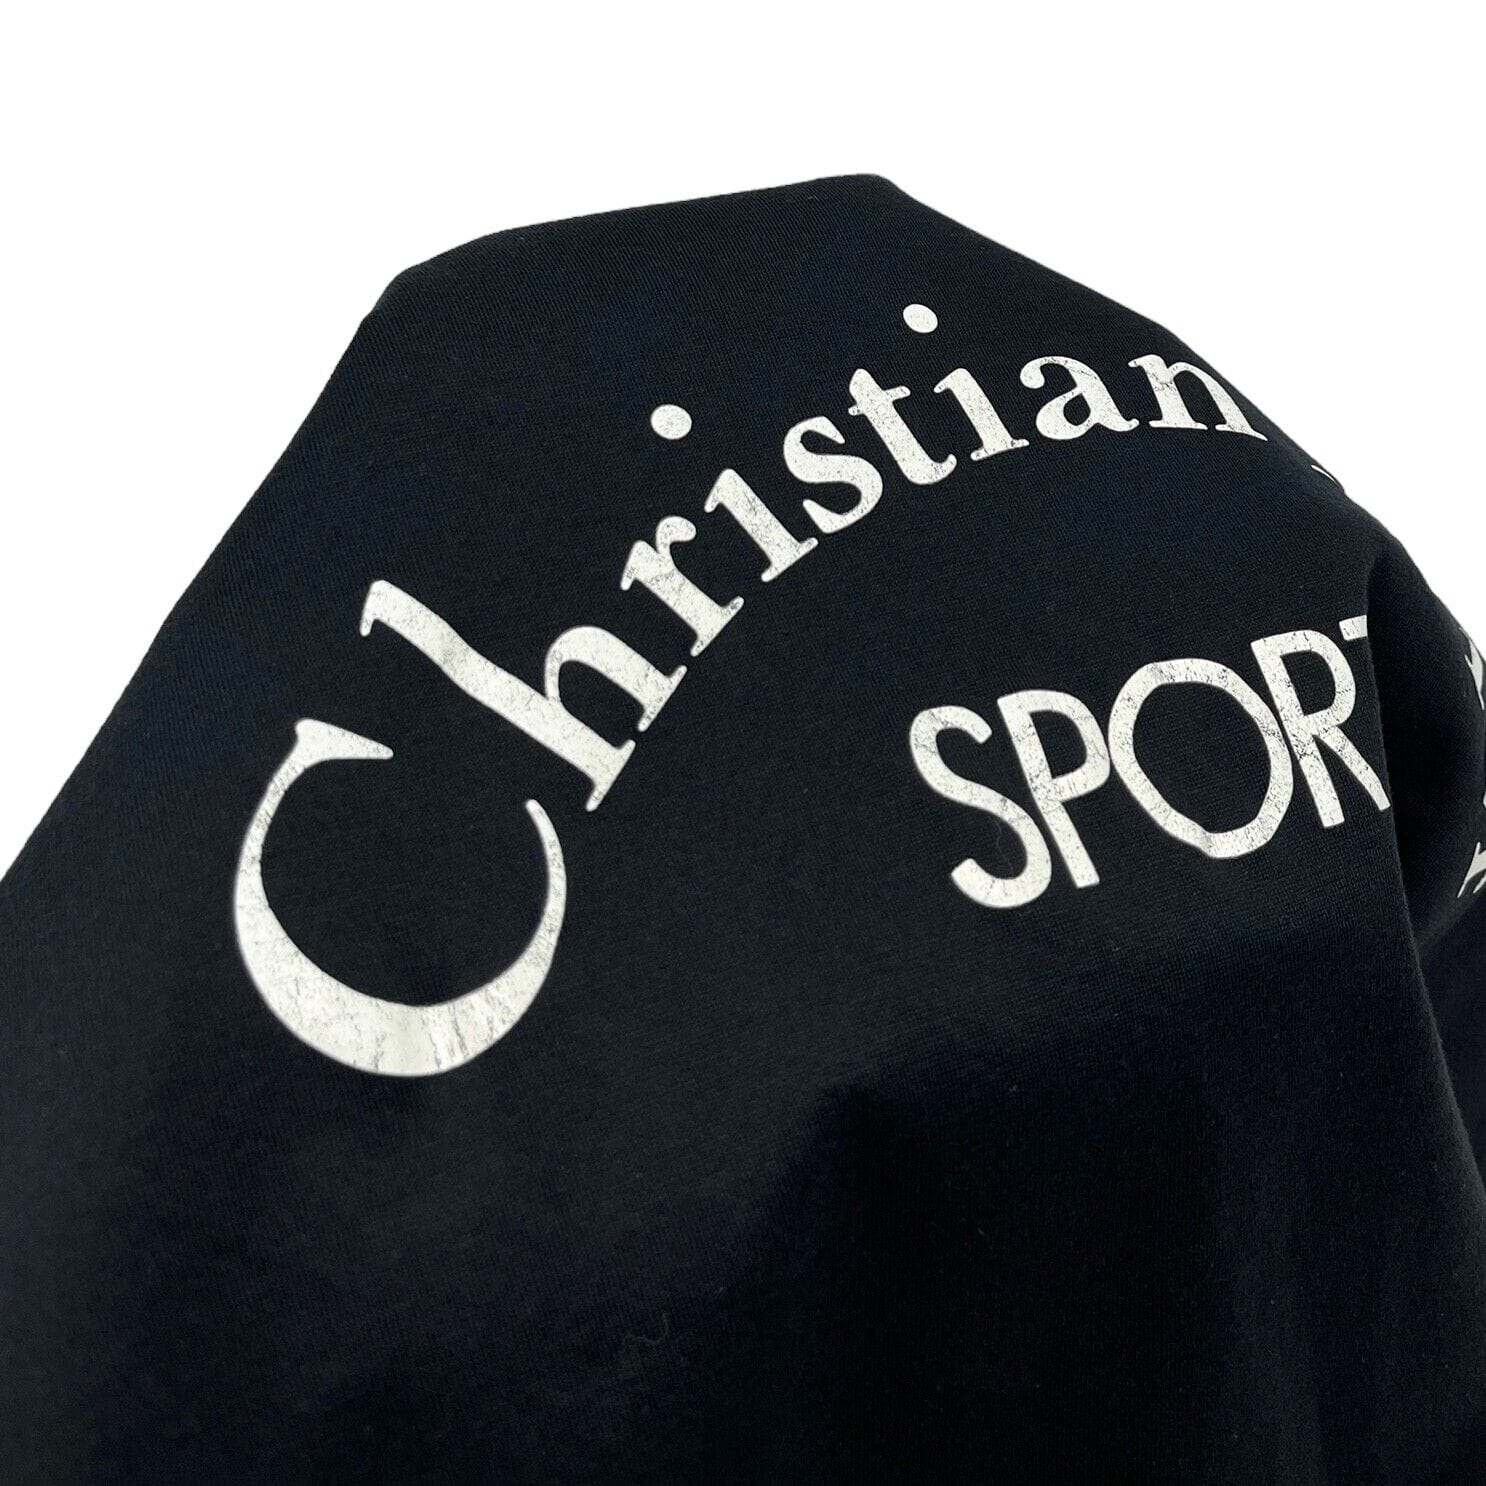 Christian Dior Christian Dior Sport Vintage Big Logo T-shirt #L Black White Cotton